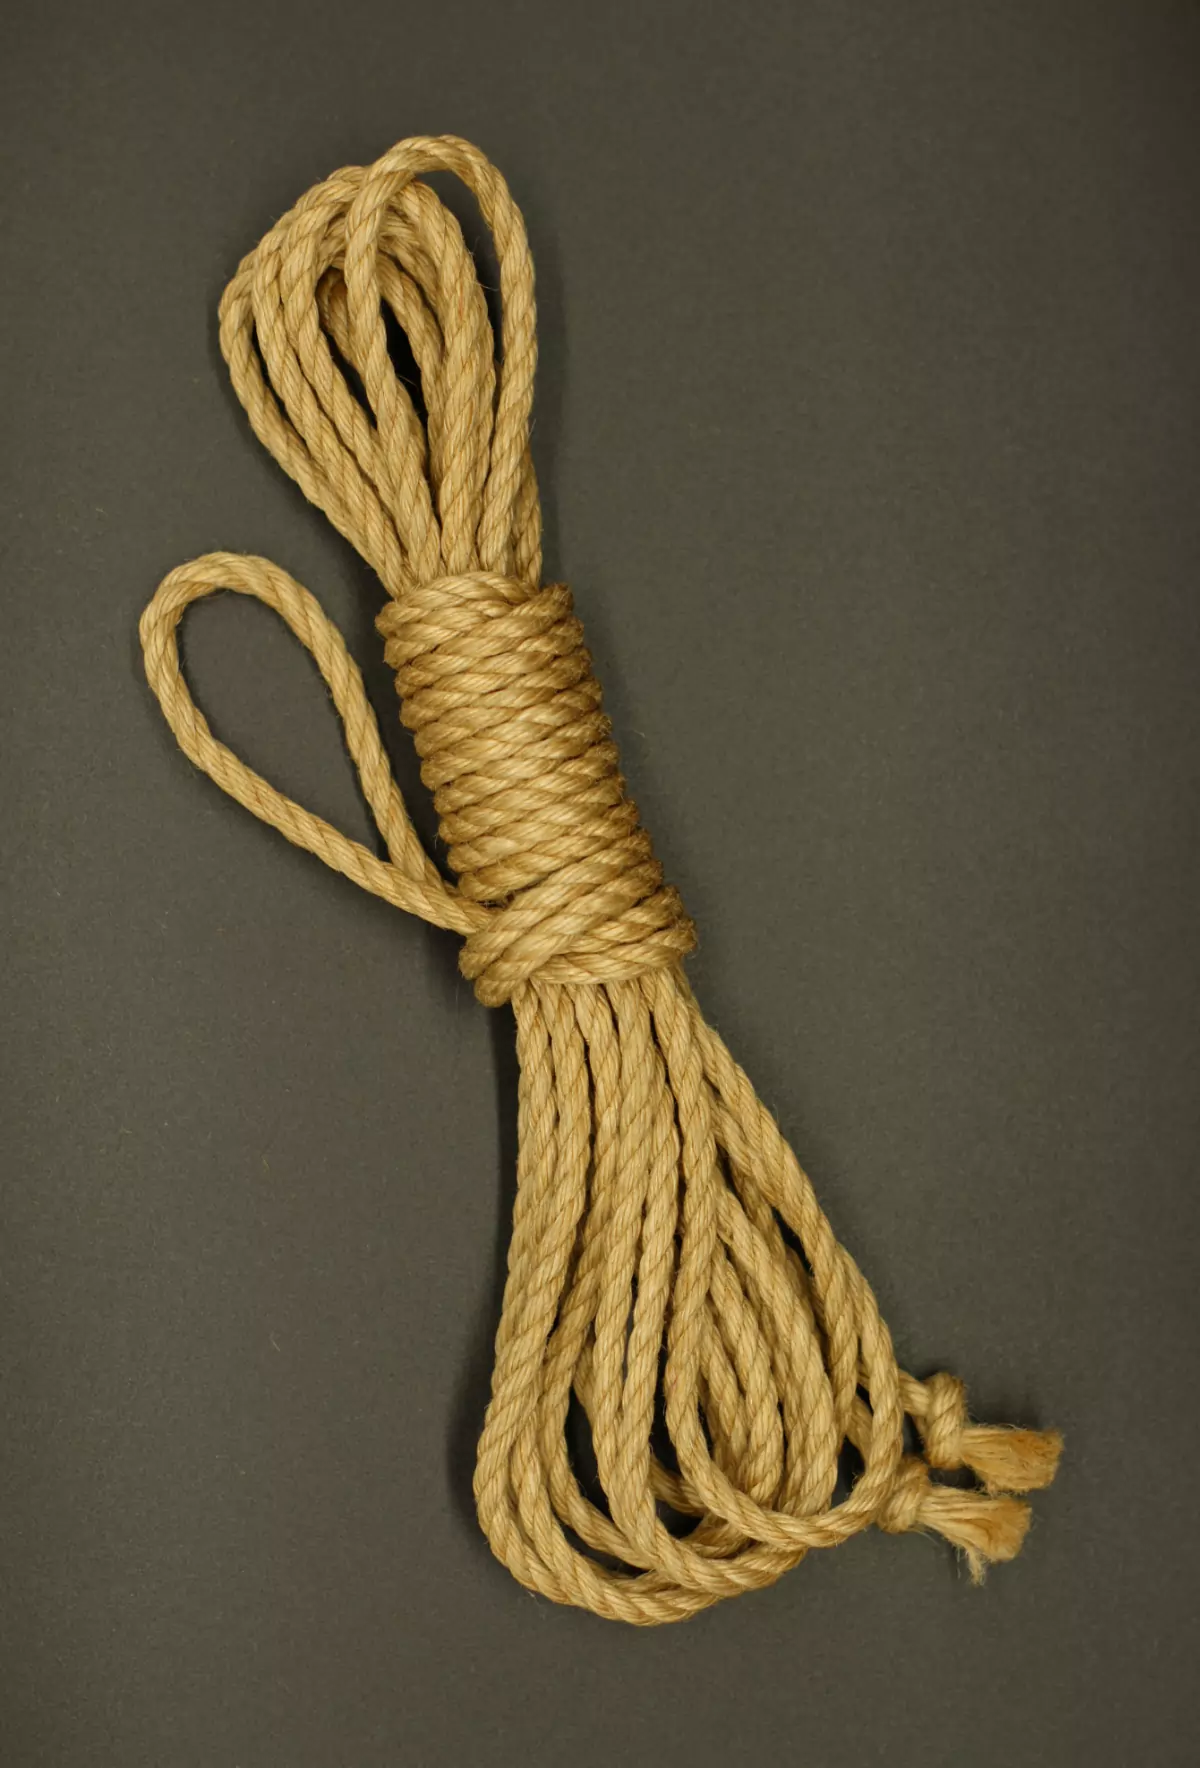  ∅ 5mm jute rope, ready-to-use, various lengths, vegan